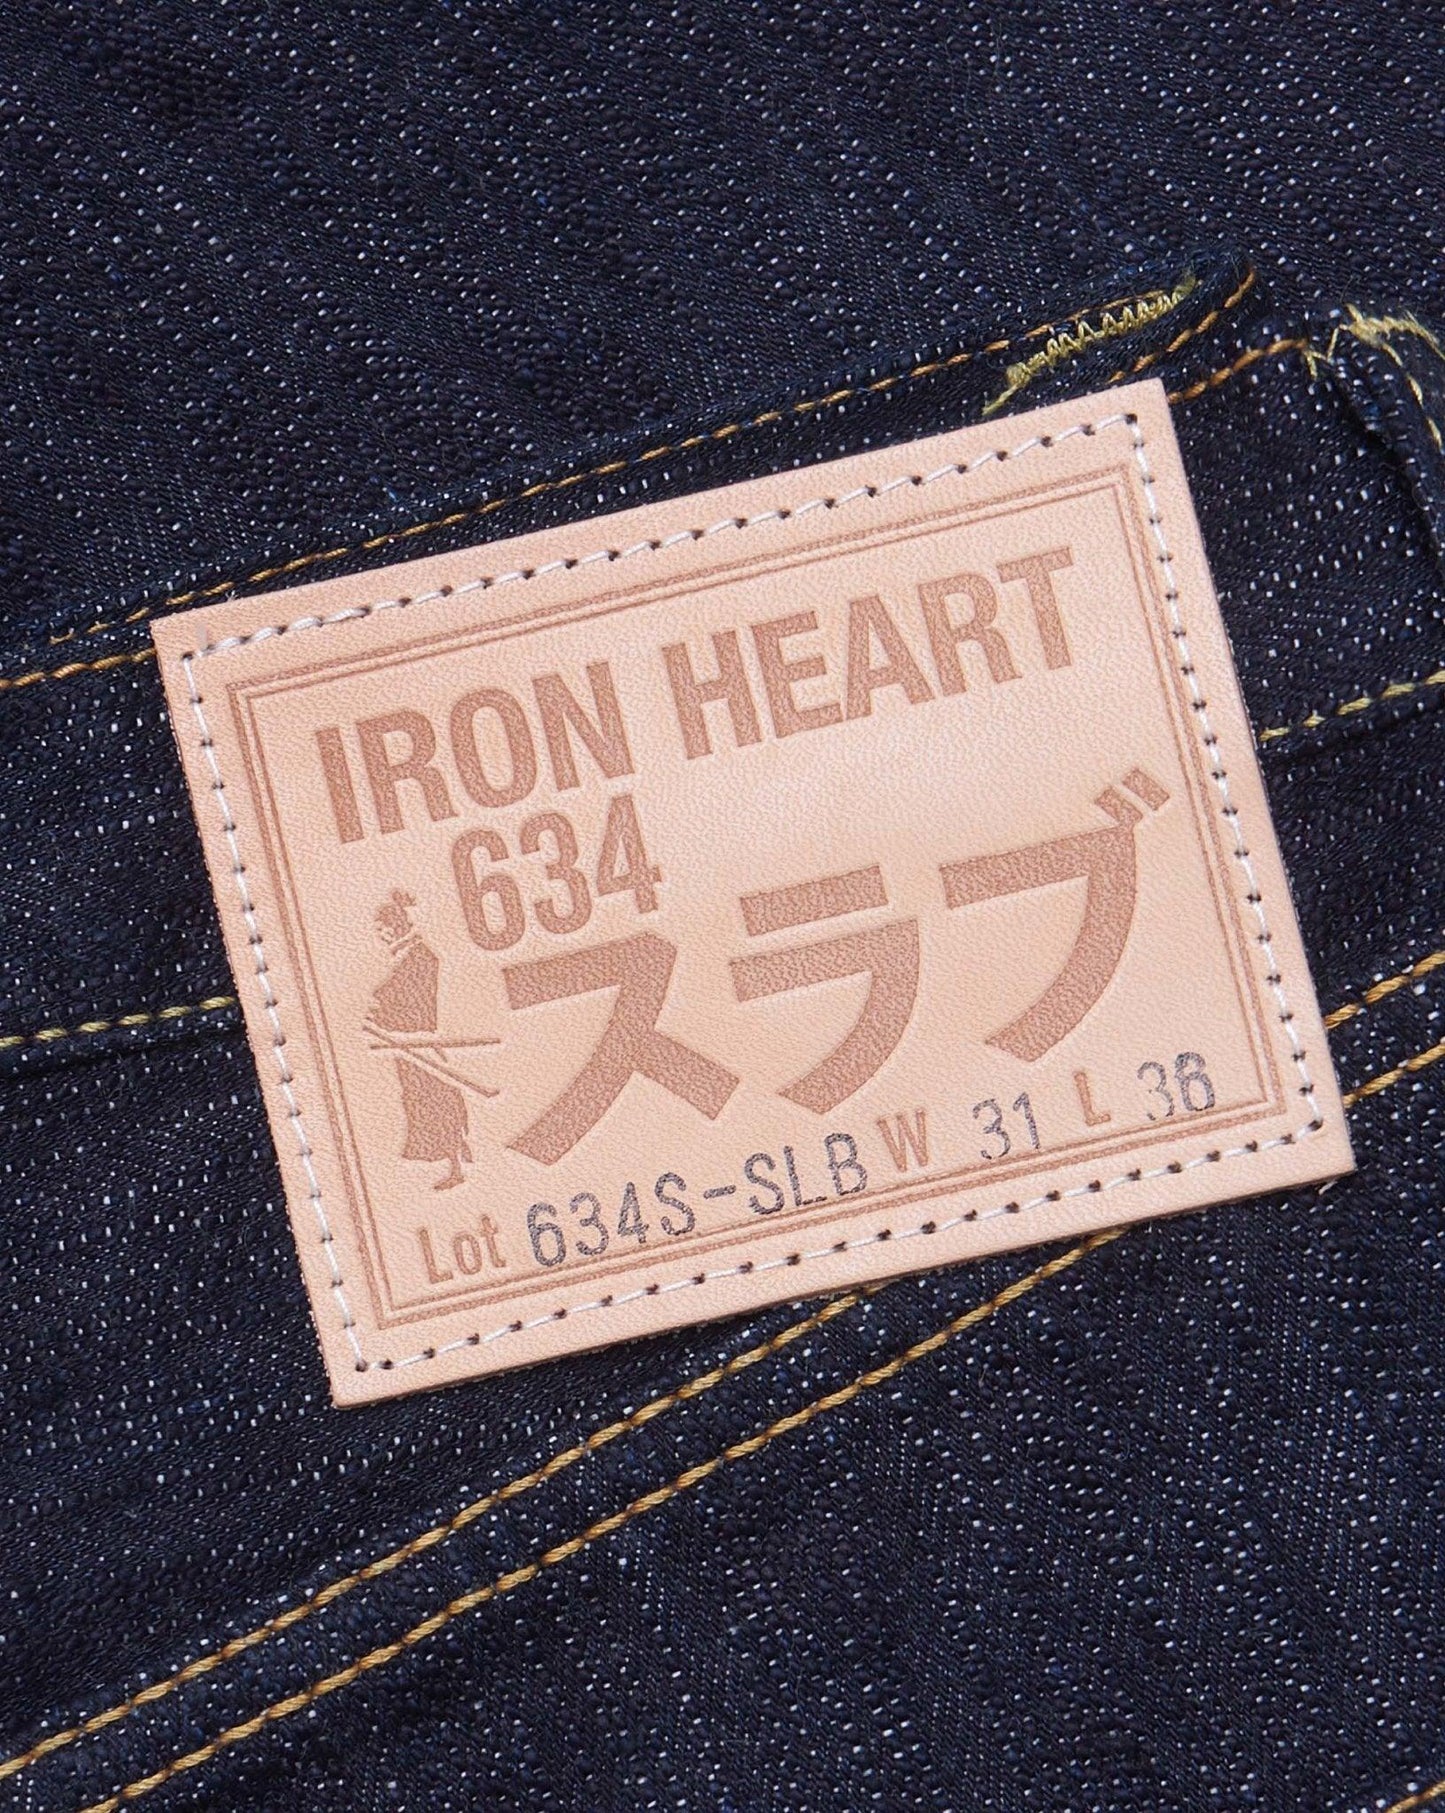 Iron Heart 16oz 634 Slubby Selvedge Denim Straight Cut Jeans - Indigo -Iron Heart - URAHARA